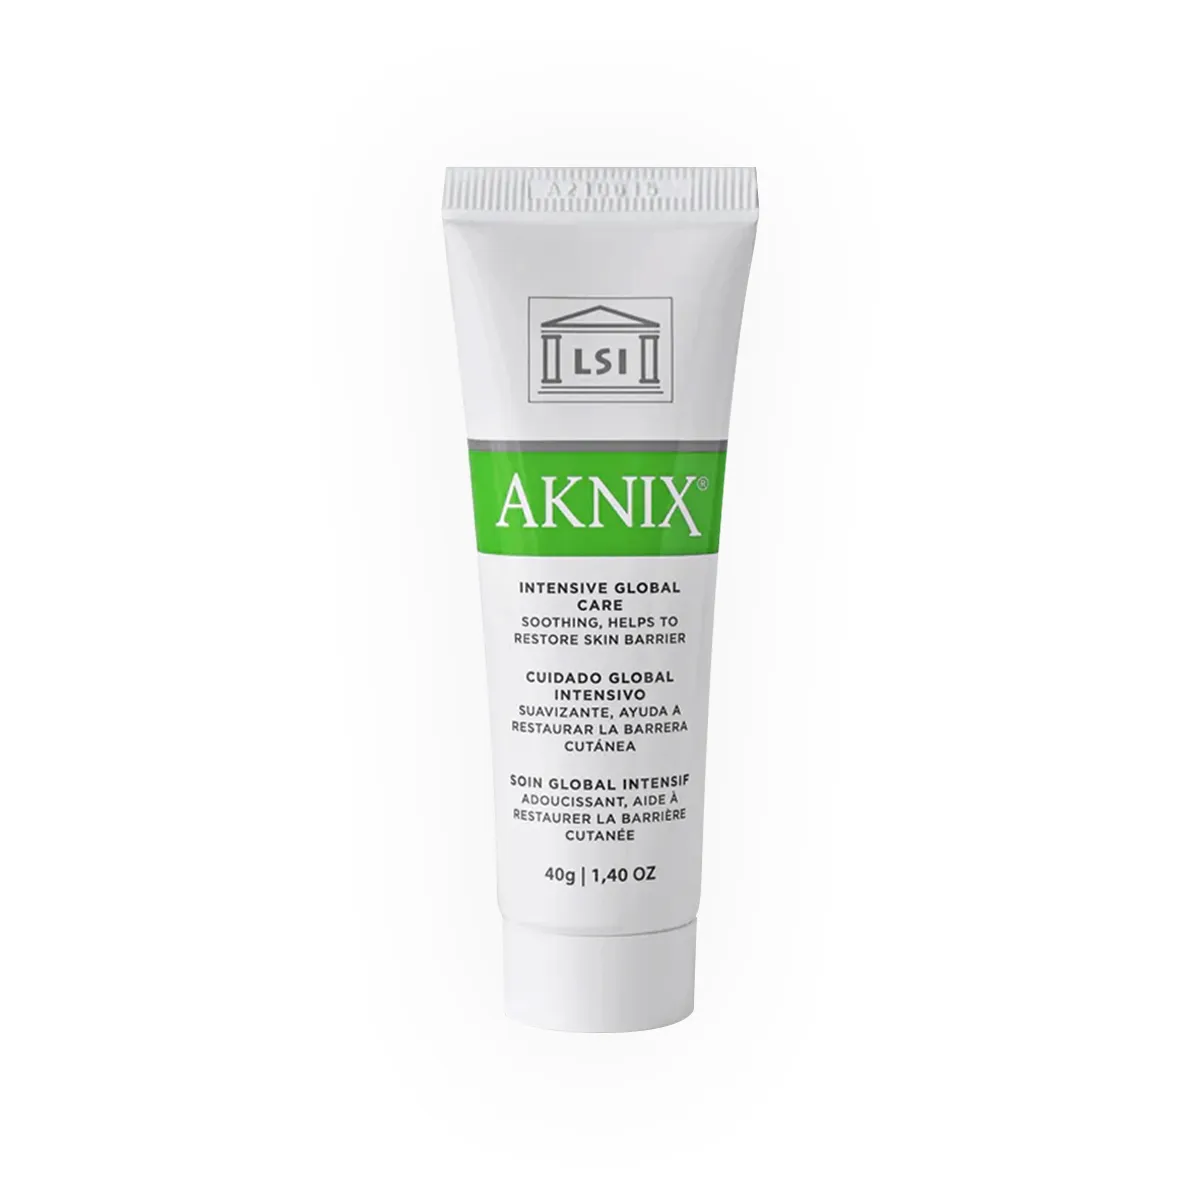 Aknix Intensive Global Care cream 40g